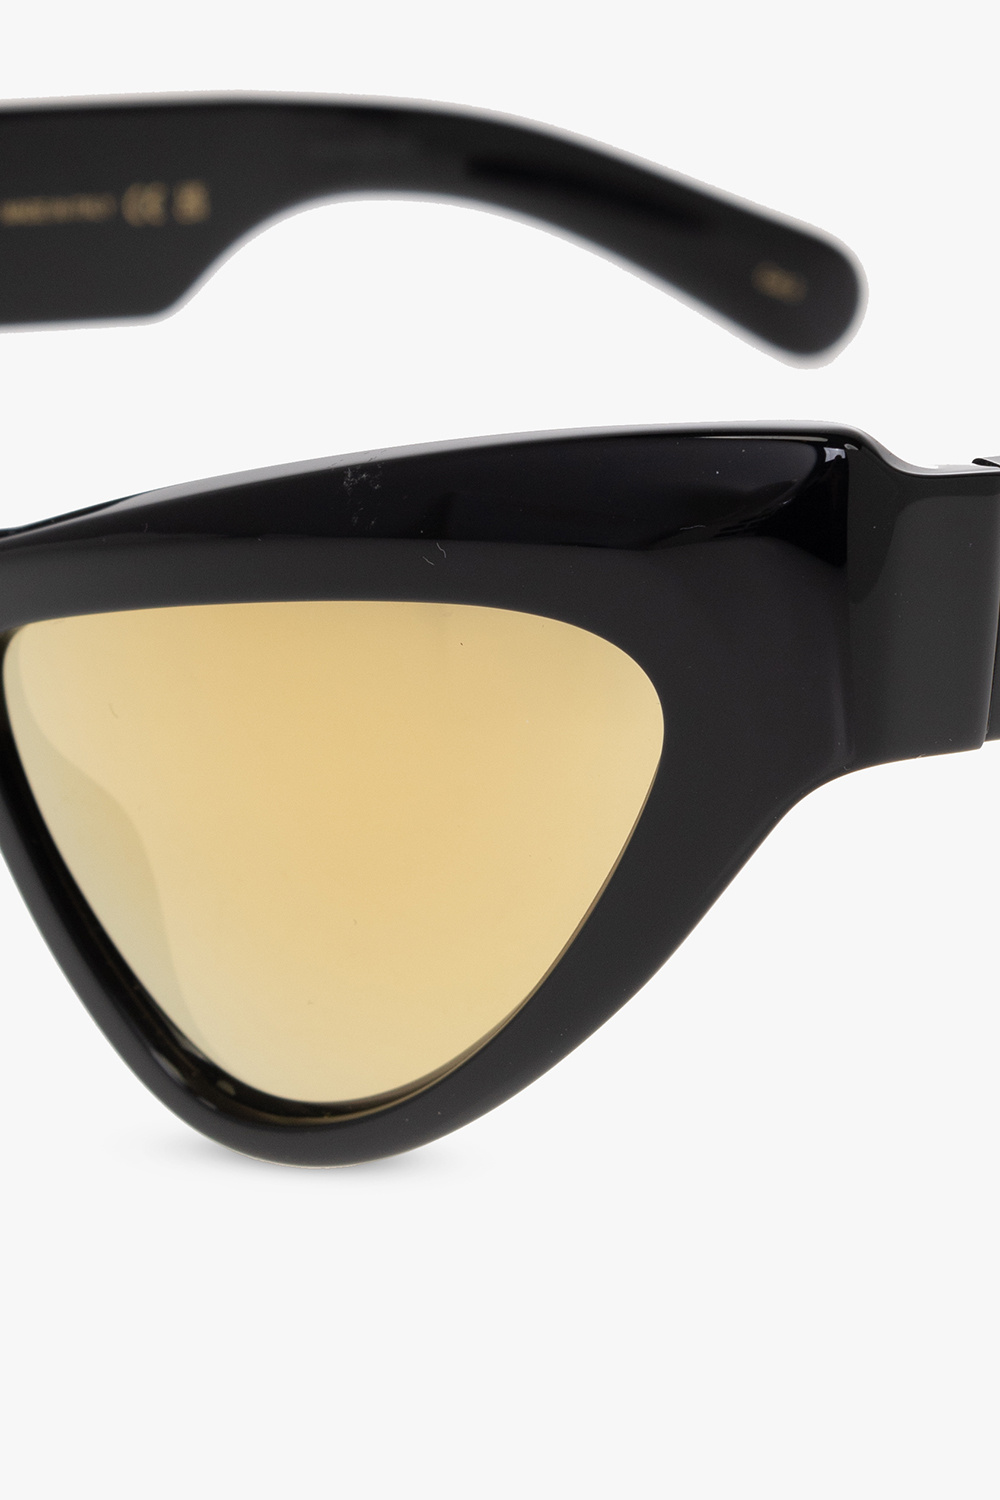 Gucci Oxblood sunglasses